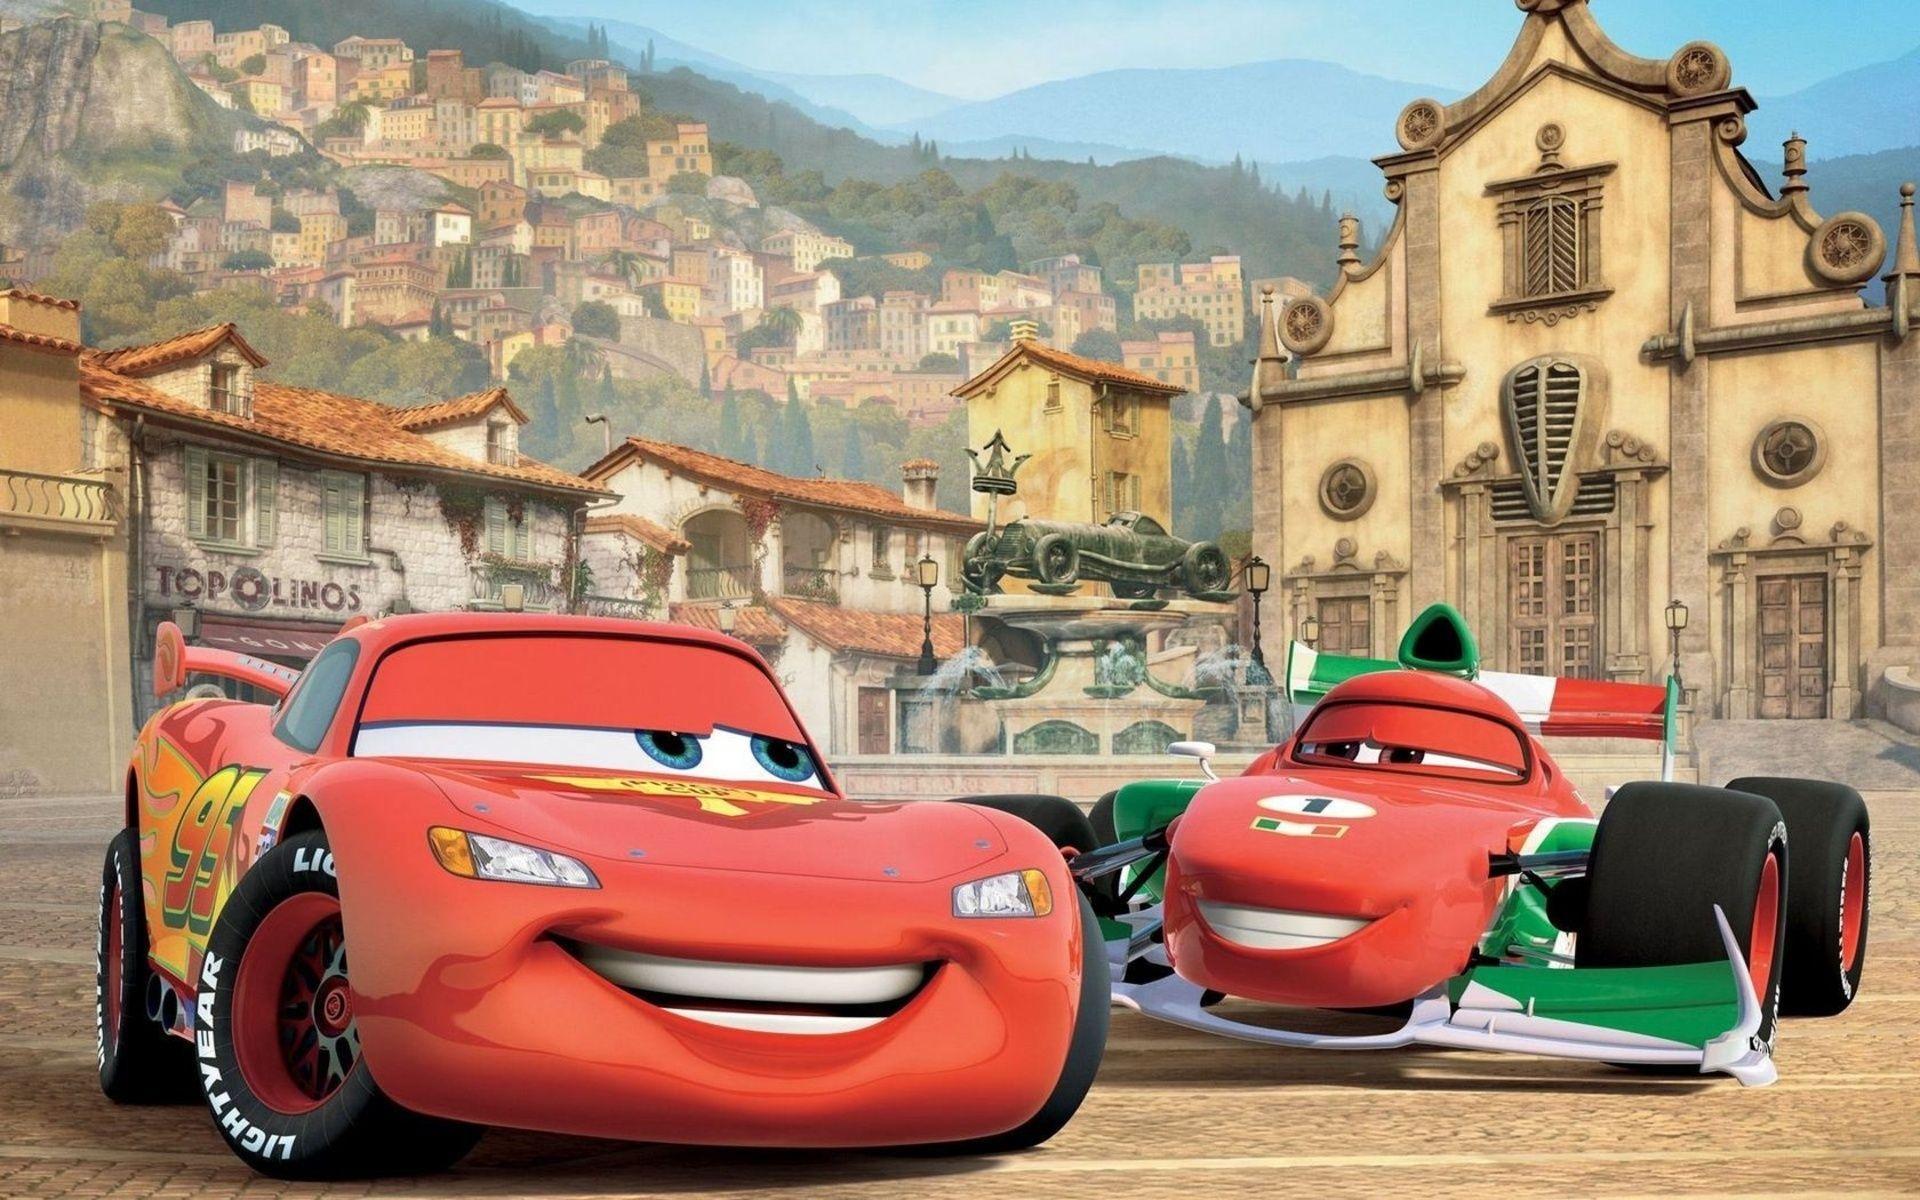 Disney Pixar Cars 2 Wallpapers - Top Free Disney Pixar Cars 2 Backgrounds -  WallpaperAccess